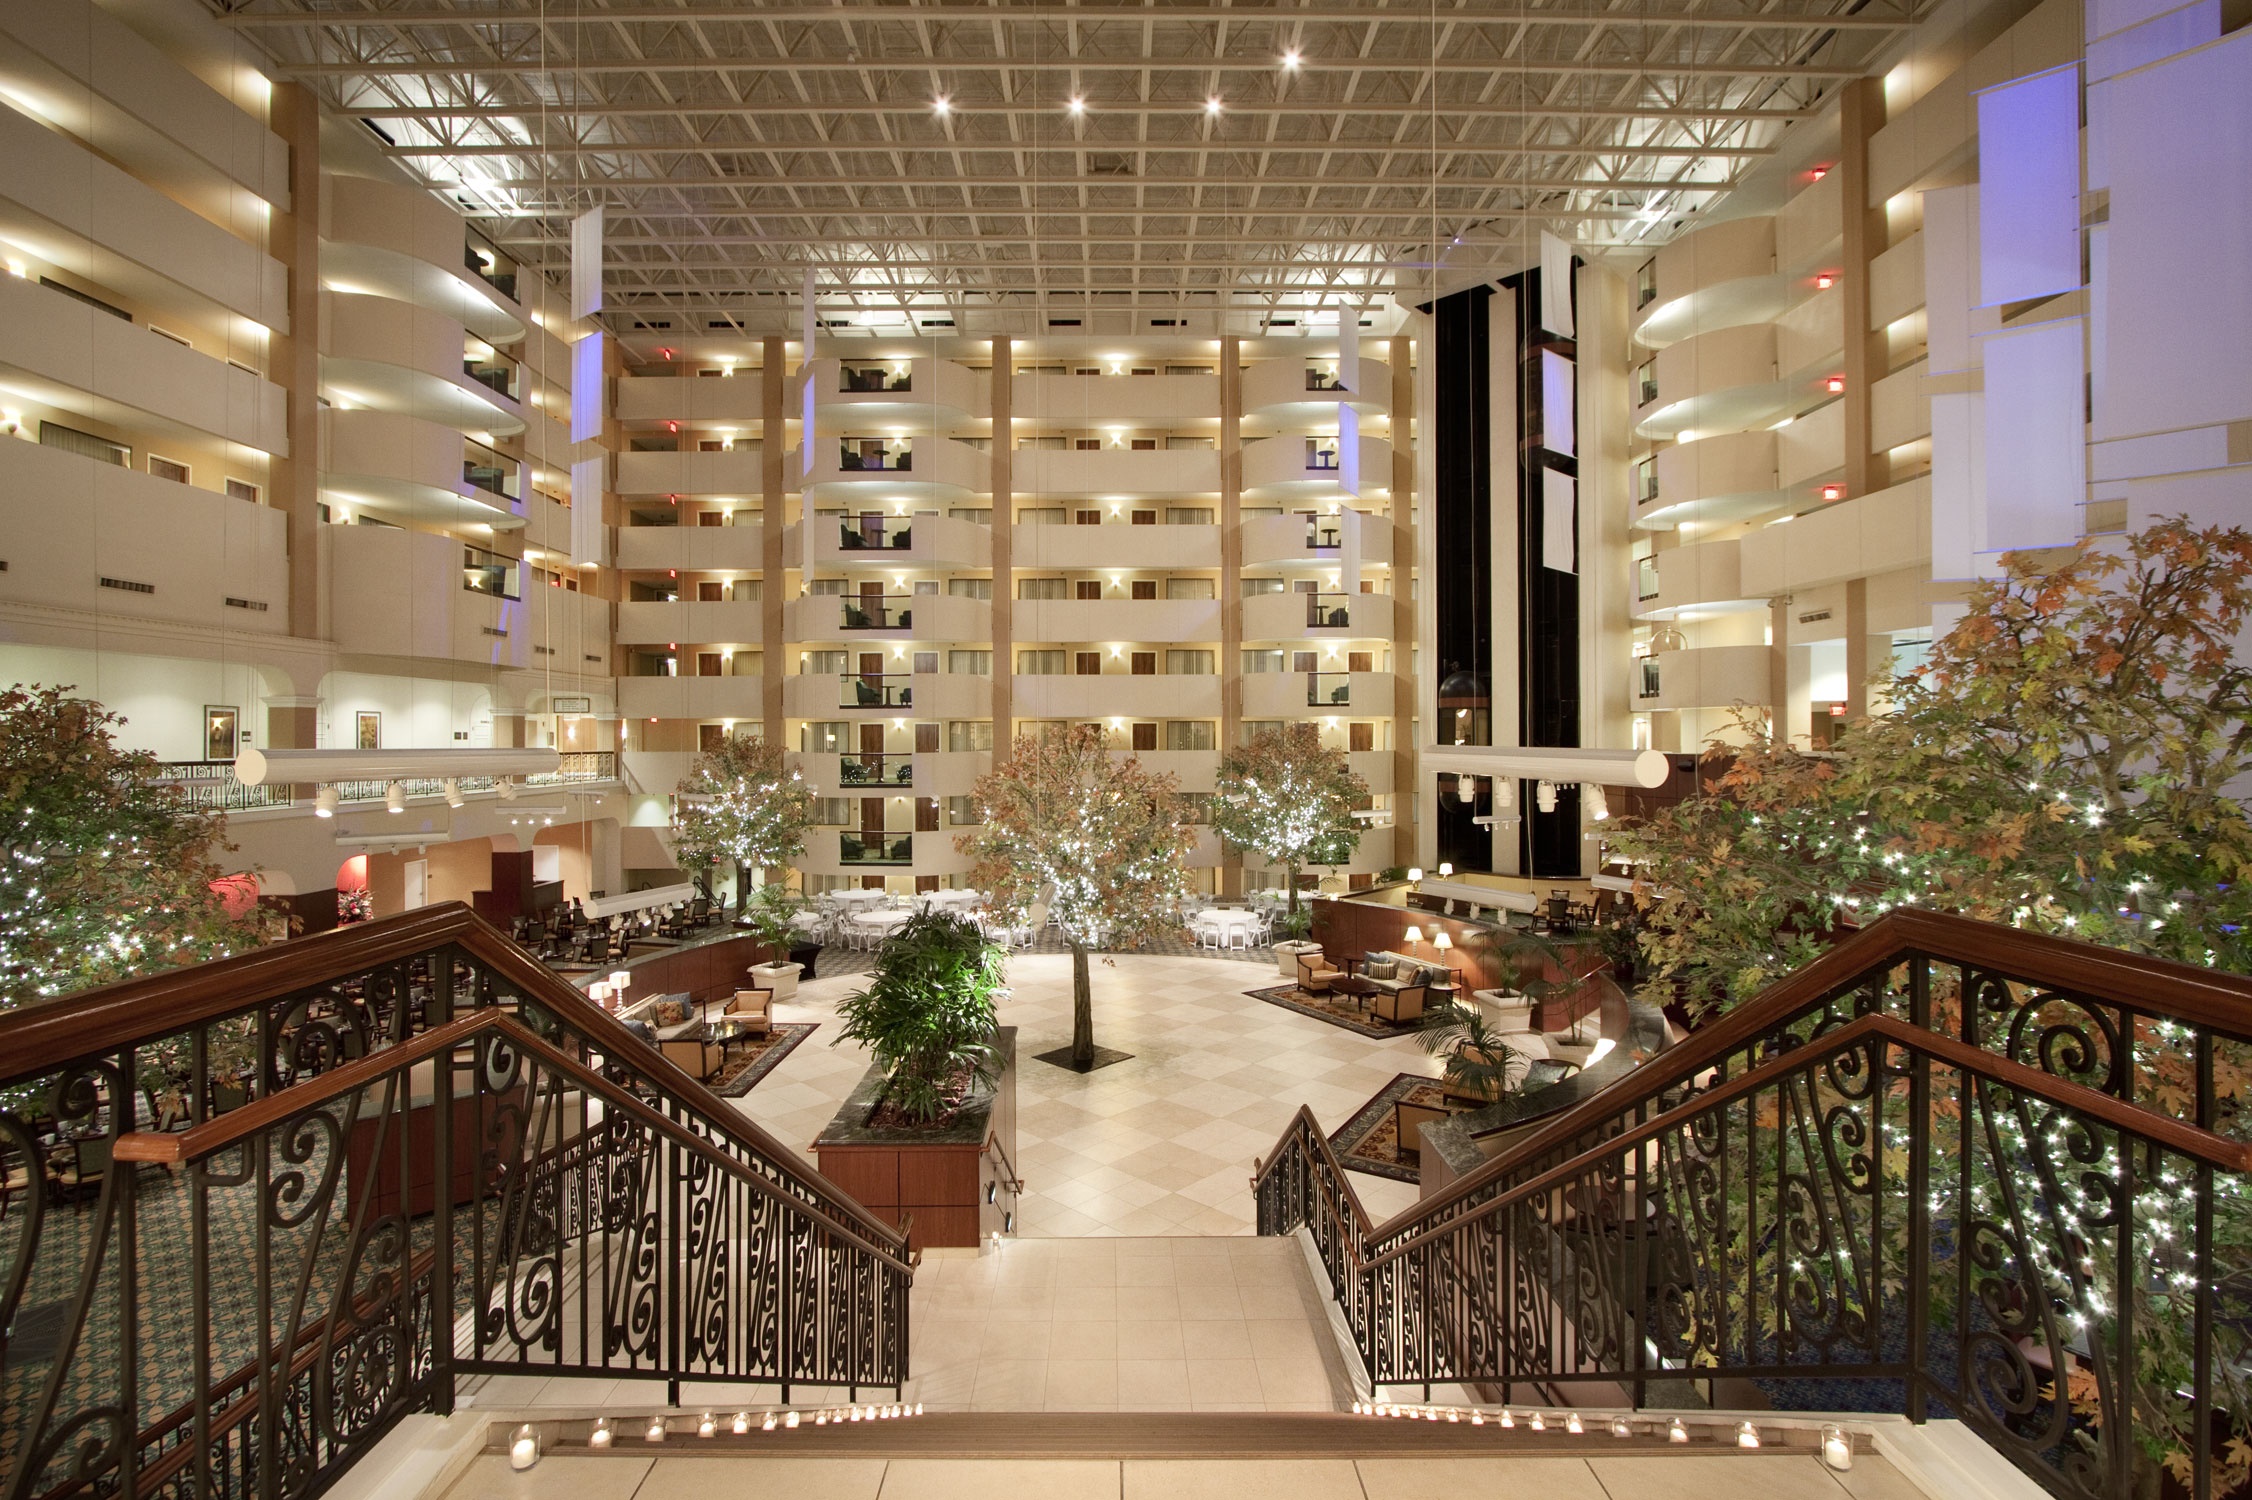 Hilton Washington DC/Rockville Hotel